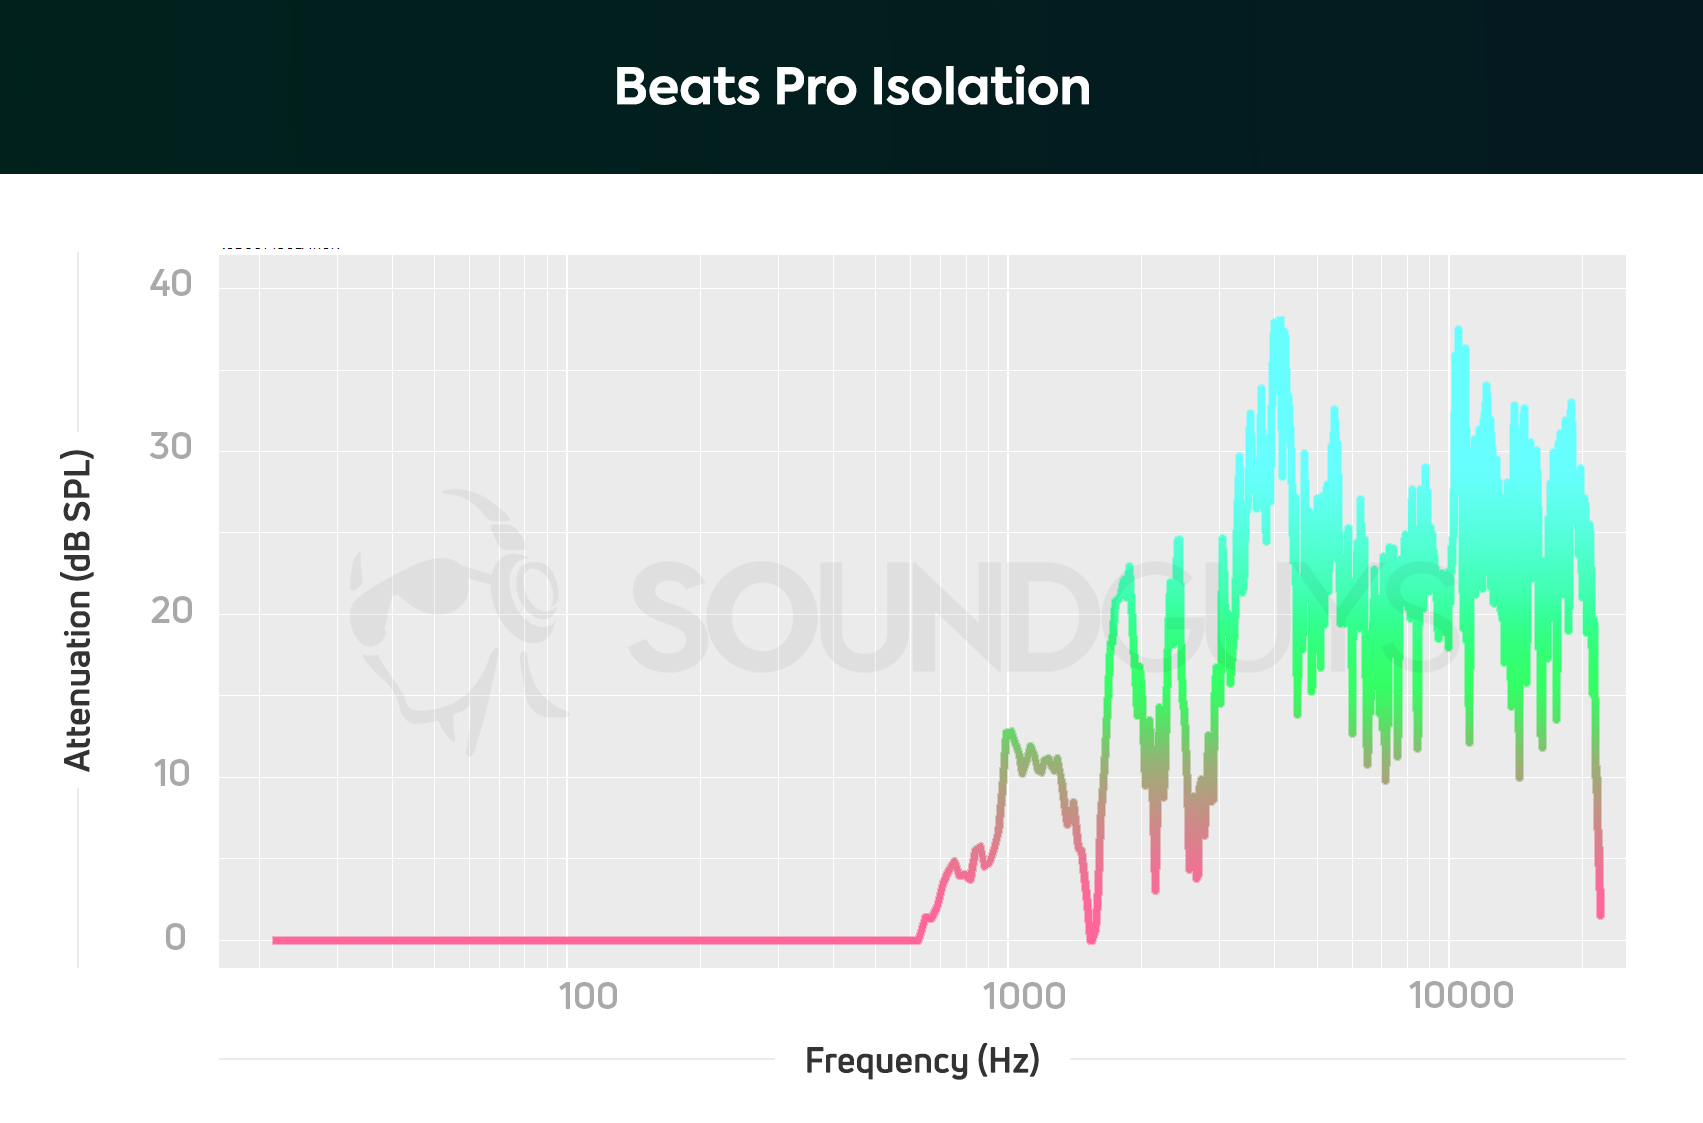 Isolation of the Beats Pro headphones.